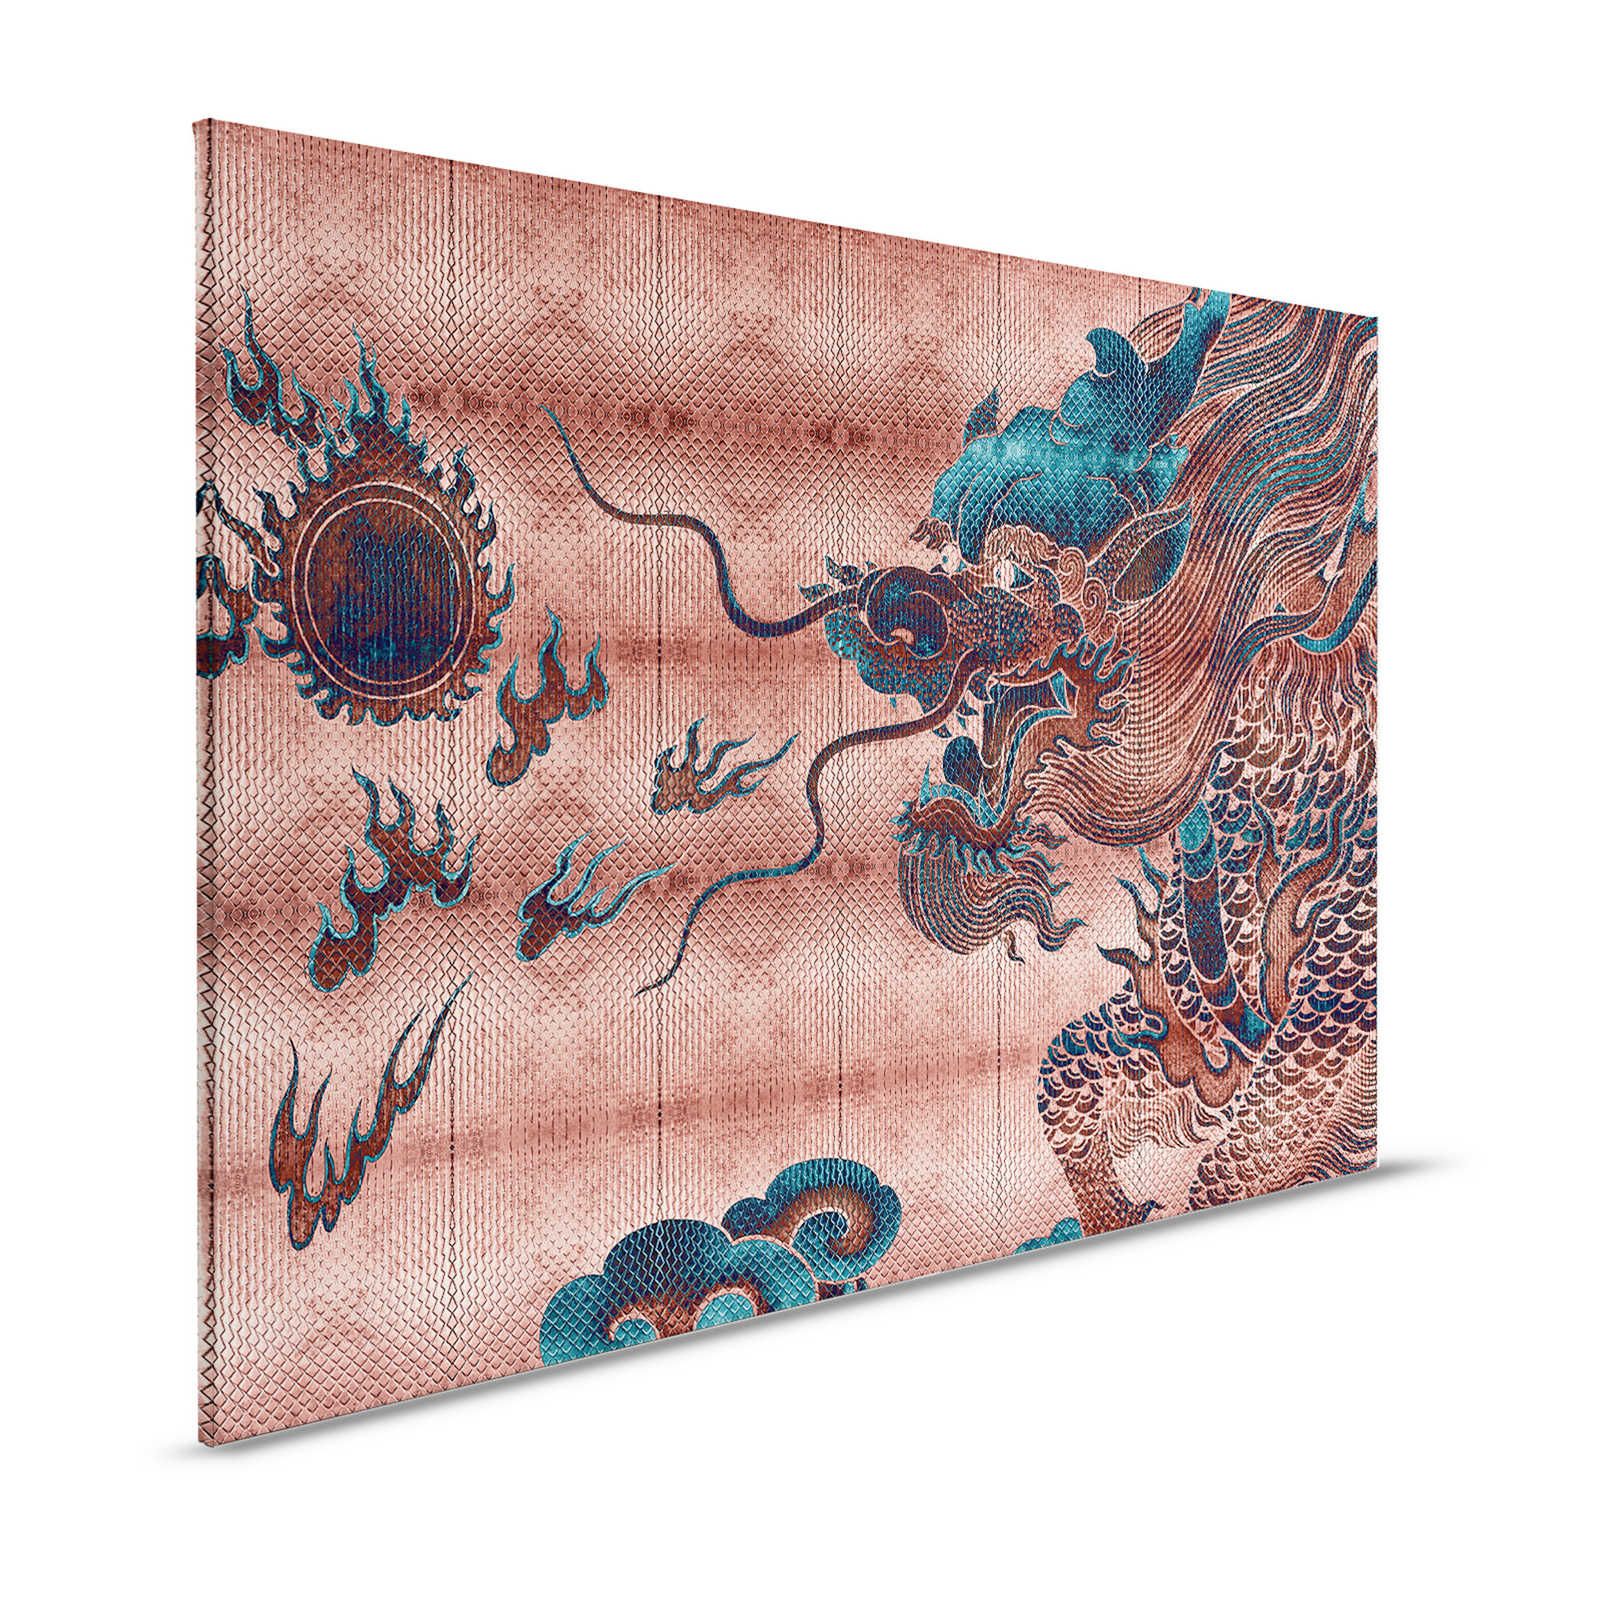 Shenzen 1 - Canvas painting Dragon Asian Syle with metallic colours - 1,20 m x 0,80 m
